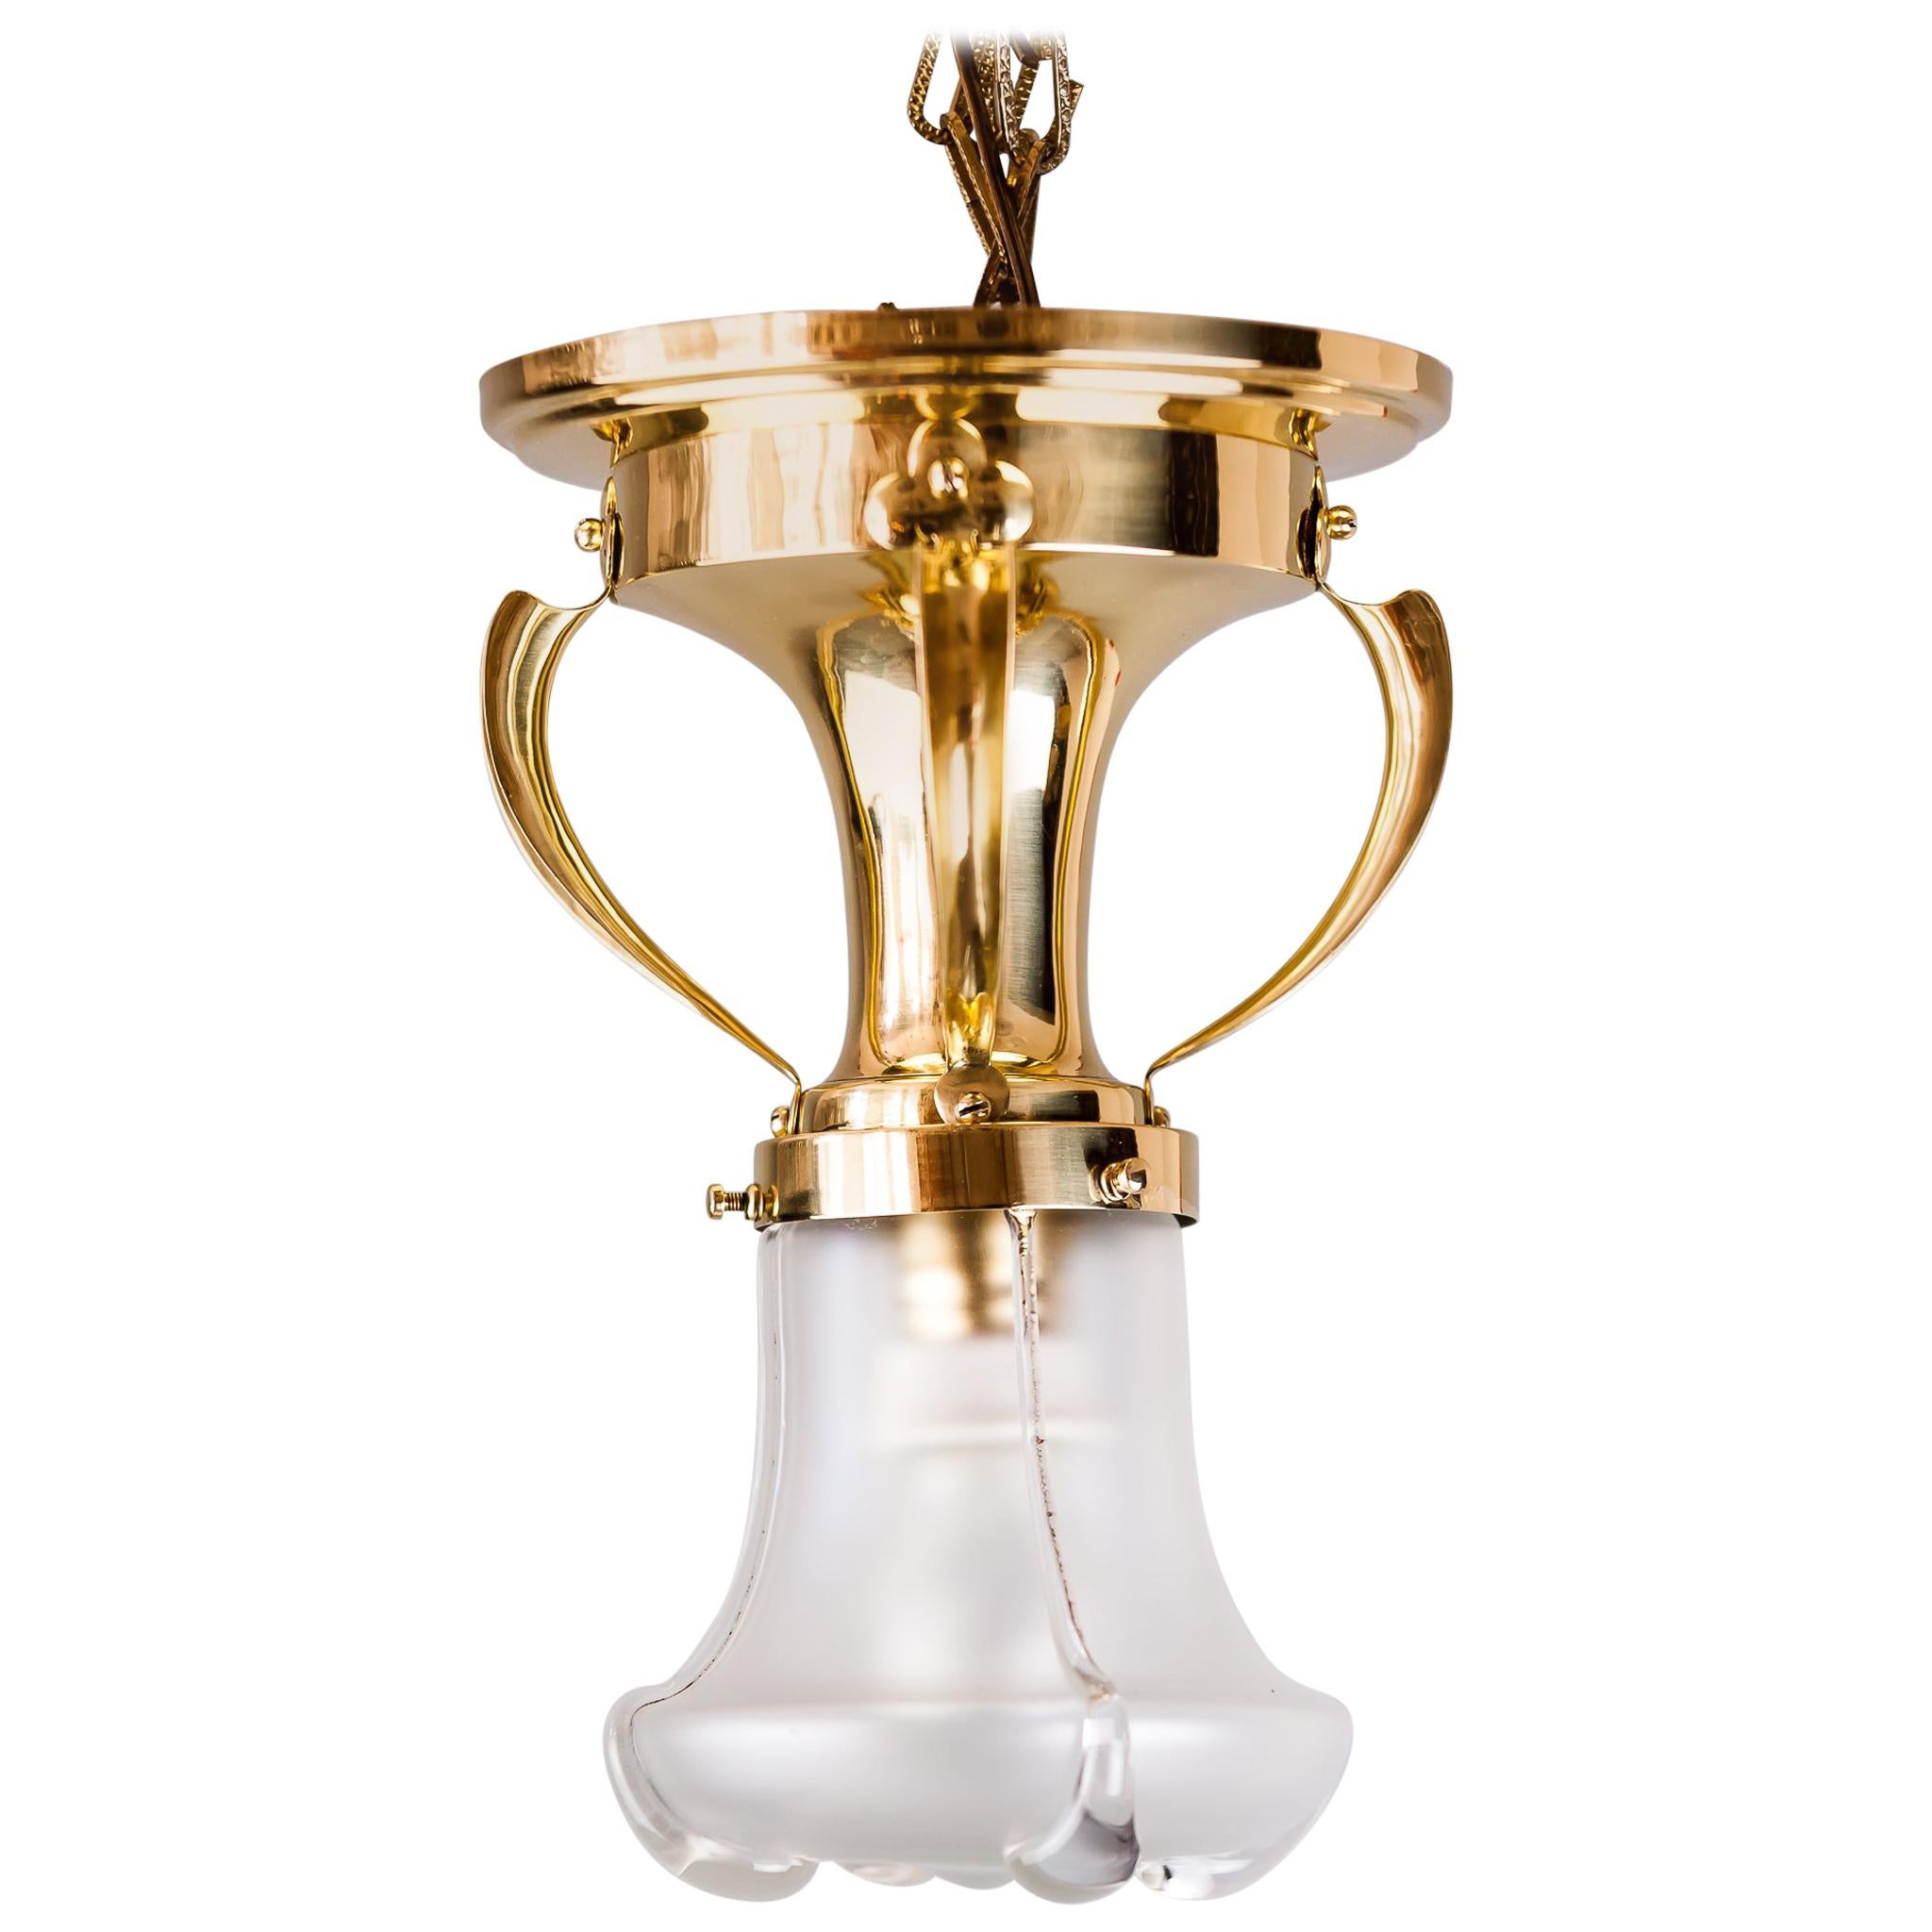 Jugendstil Ceiling Lamp circa 1910s with Original Glass Shade